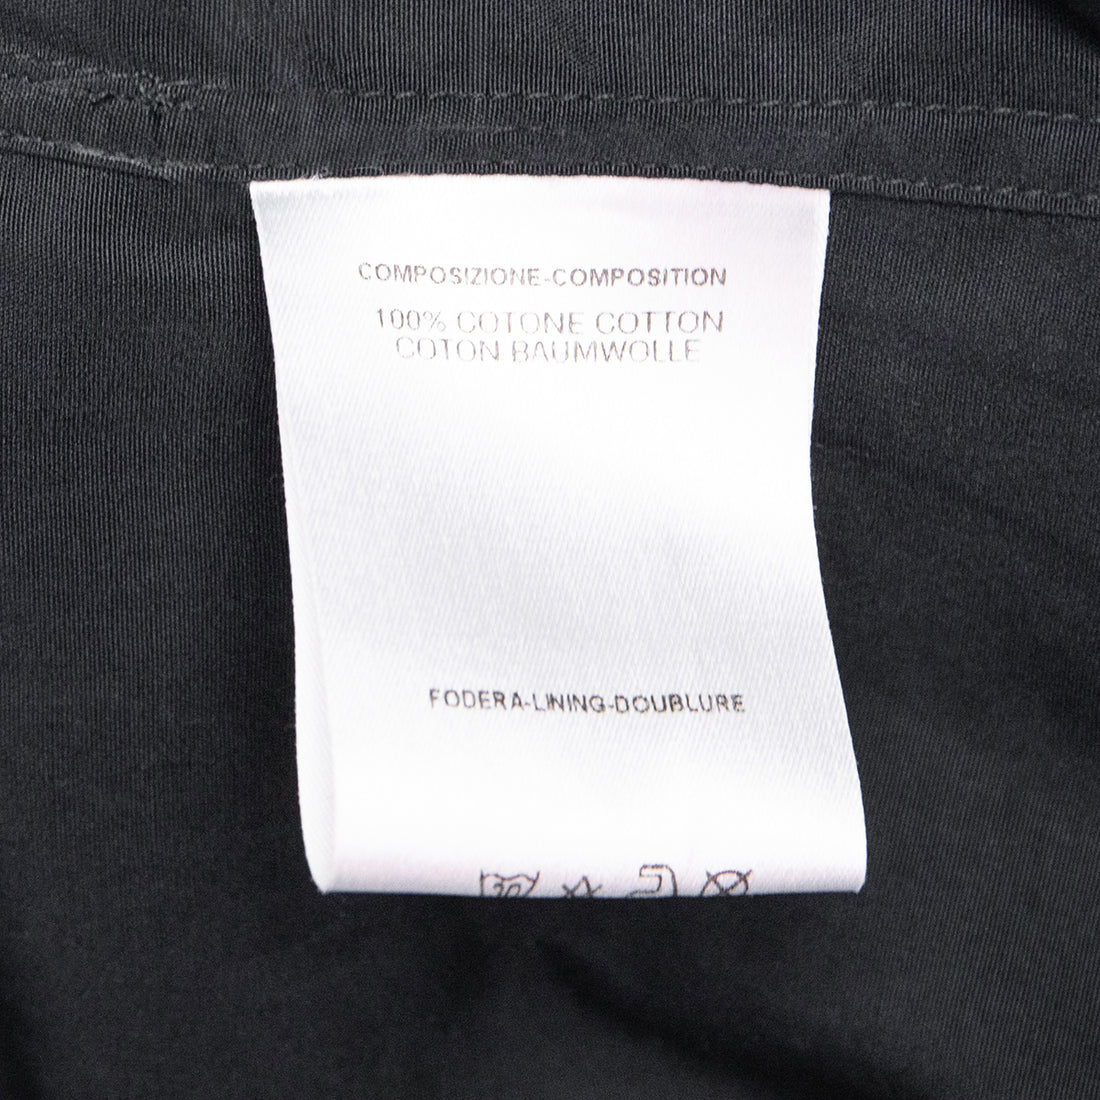 Gucci cotton shirt with narrow waist belt (CLEANING)